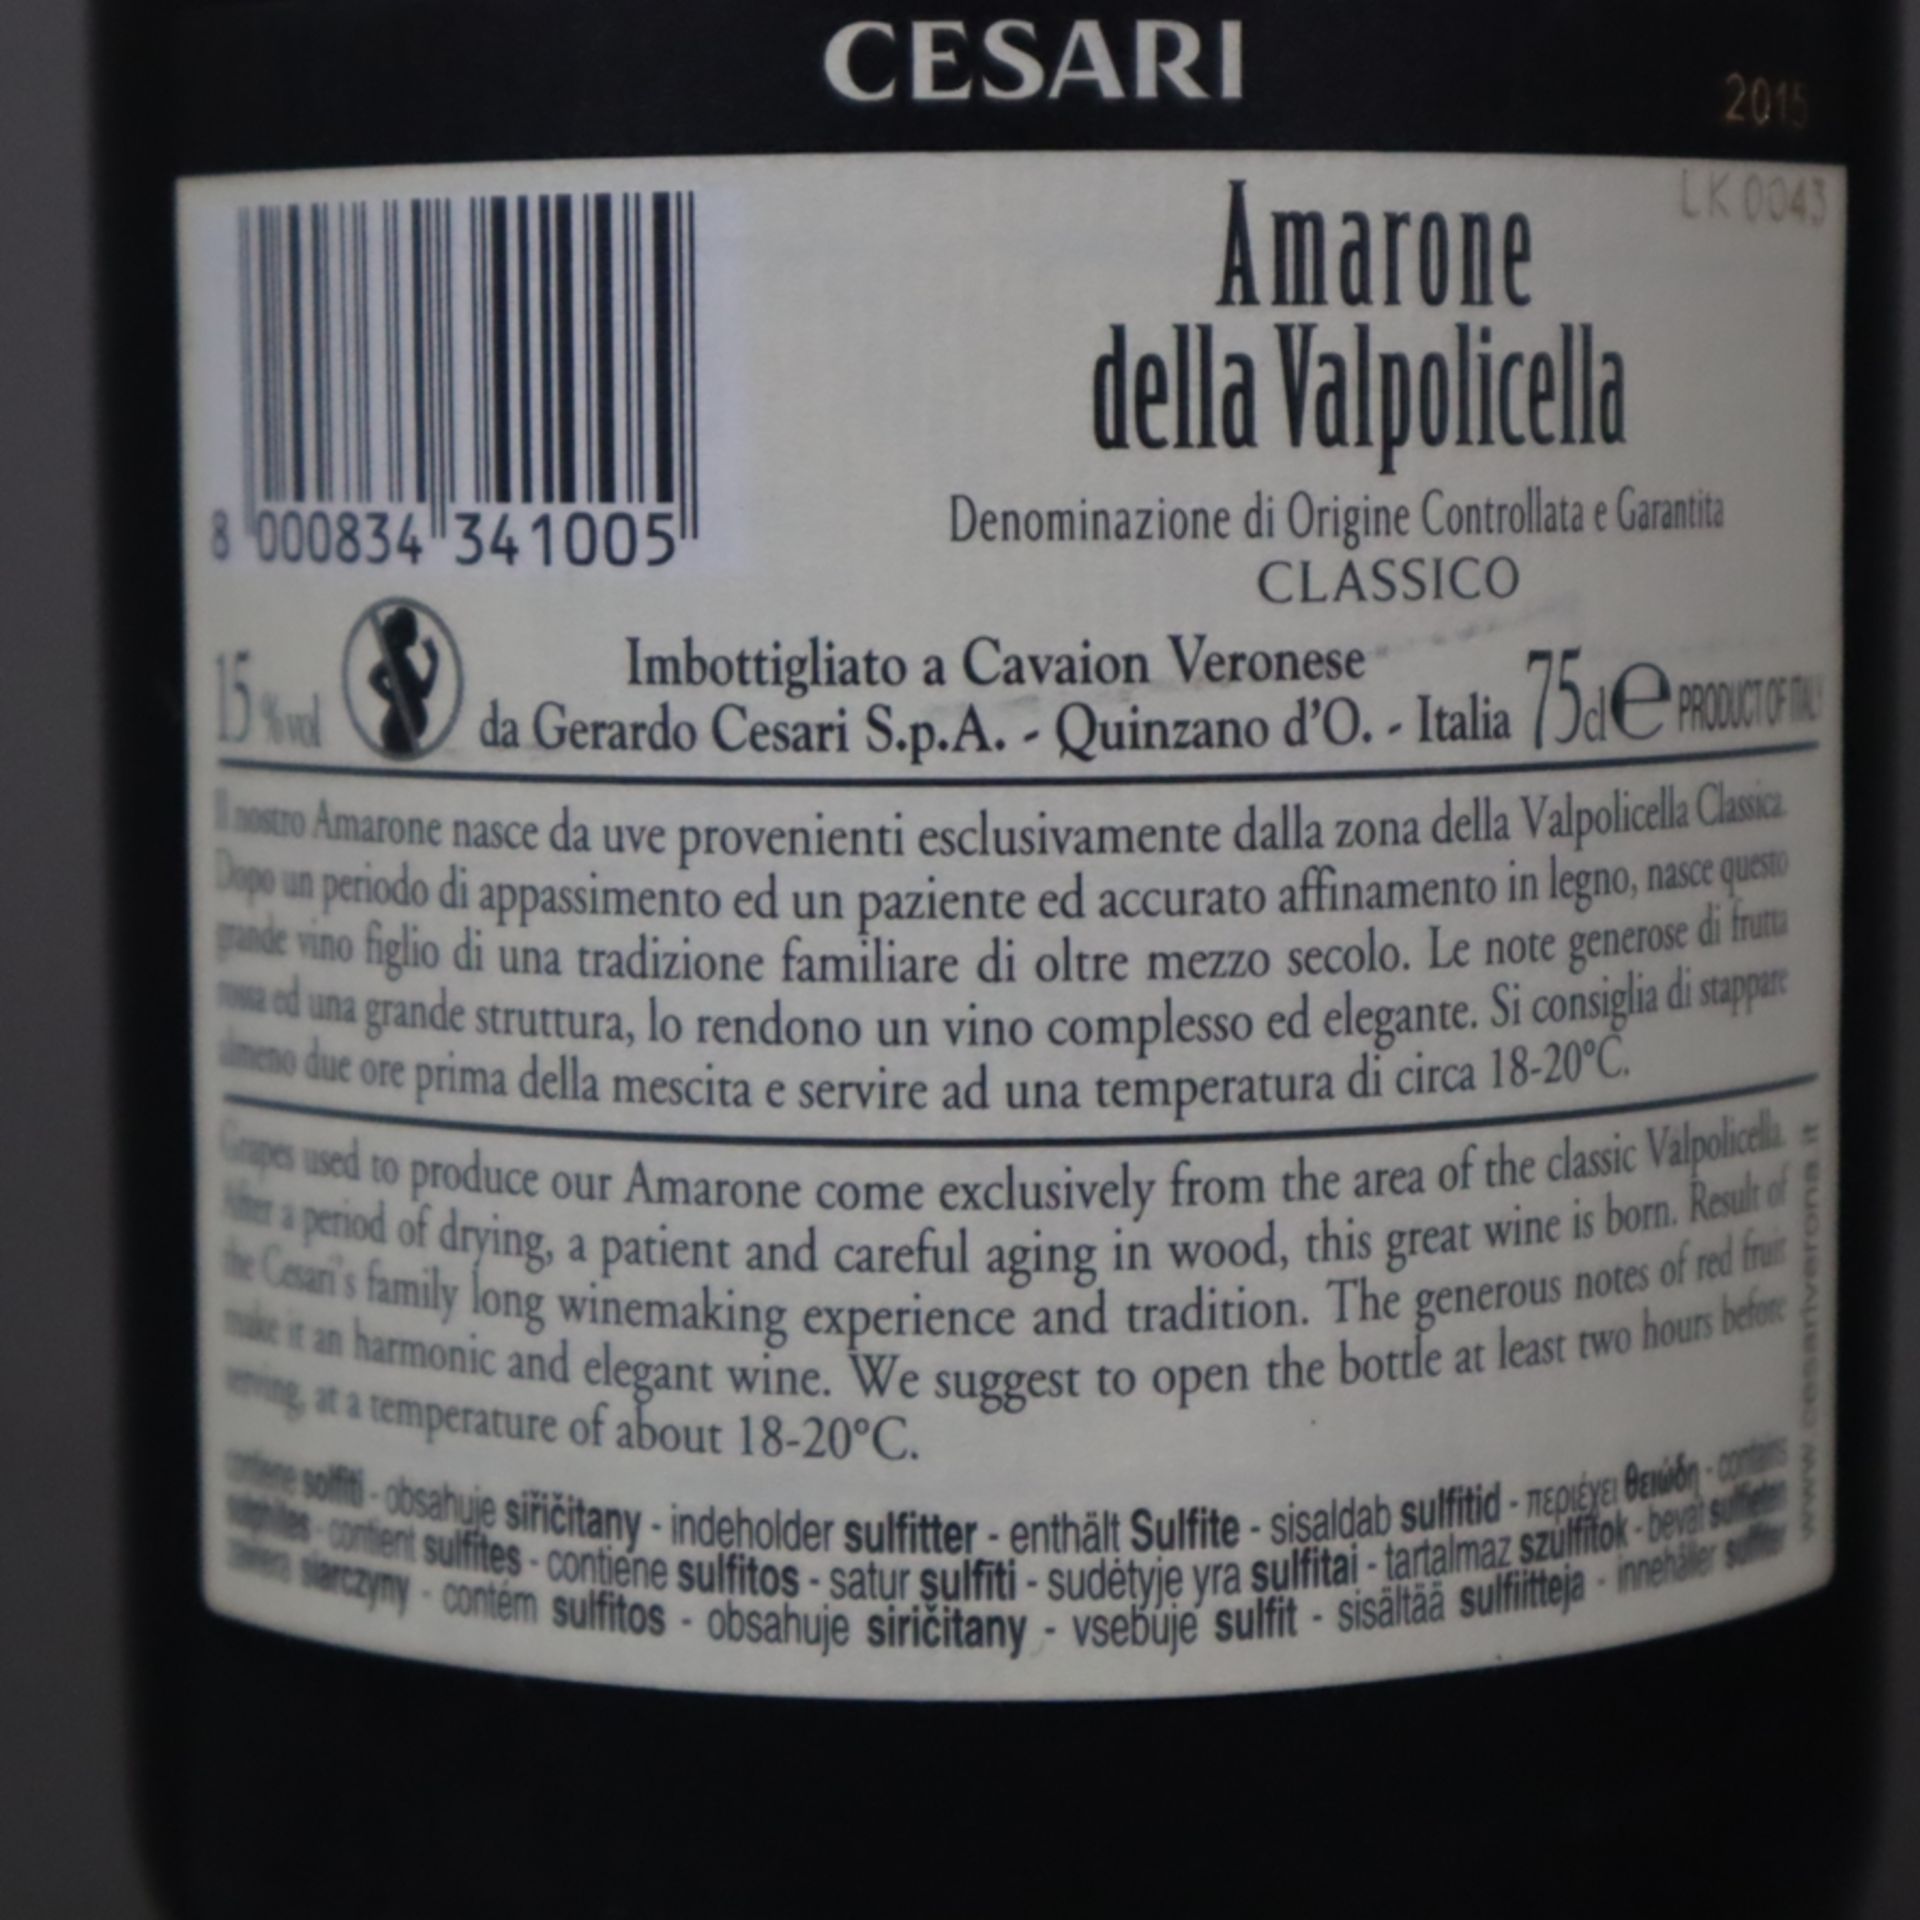 Weinkonvolut - 2 Flaschen, Cesari Amarone della Valpolicella, Classico, Jahrgang 2015, 0,7 Liter - Image 5 of 5